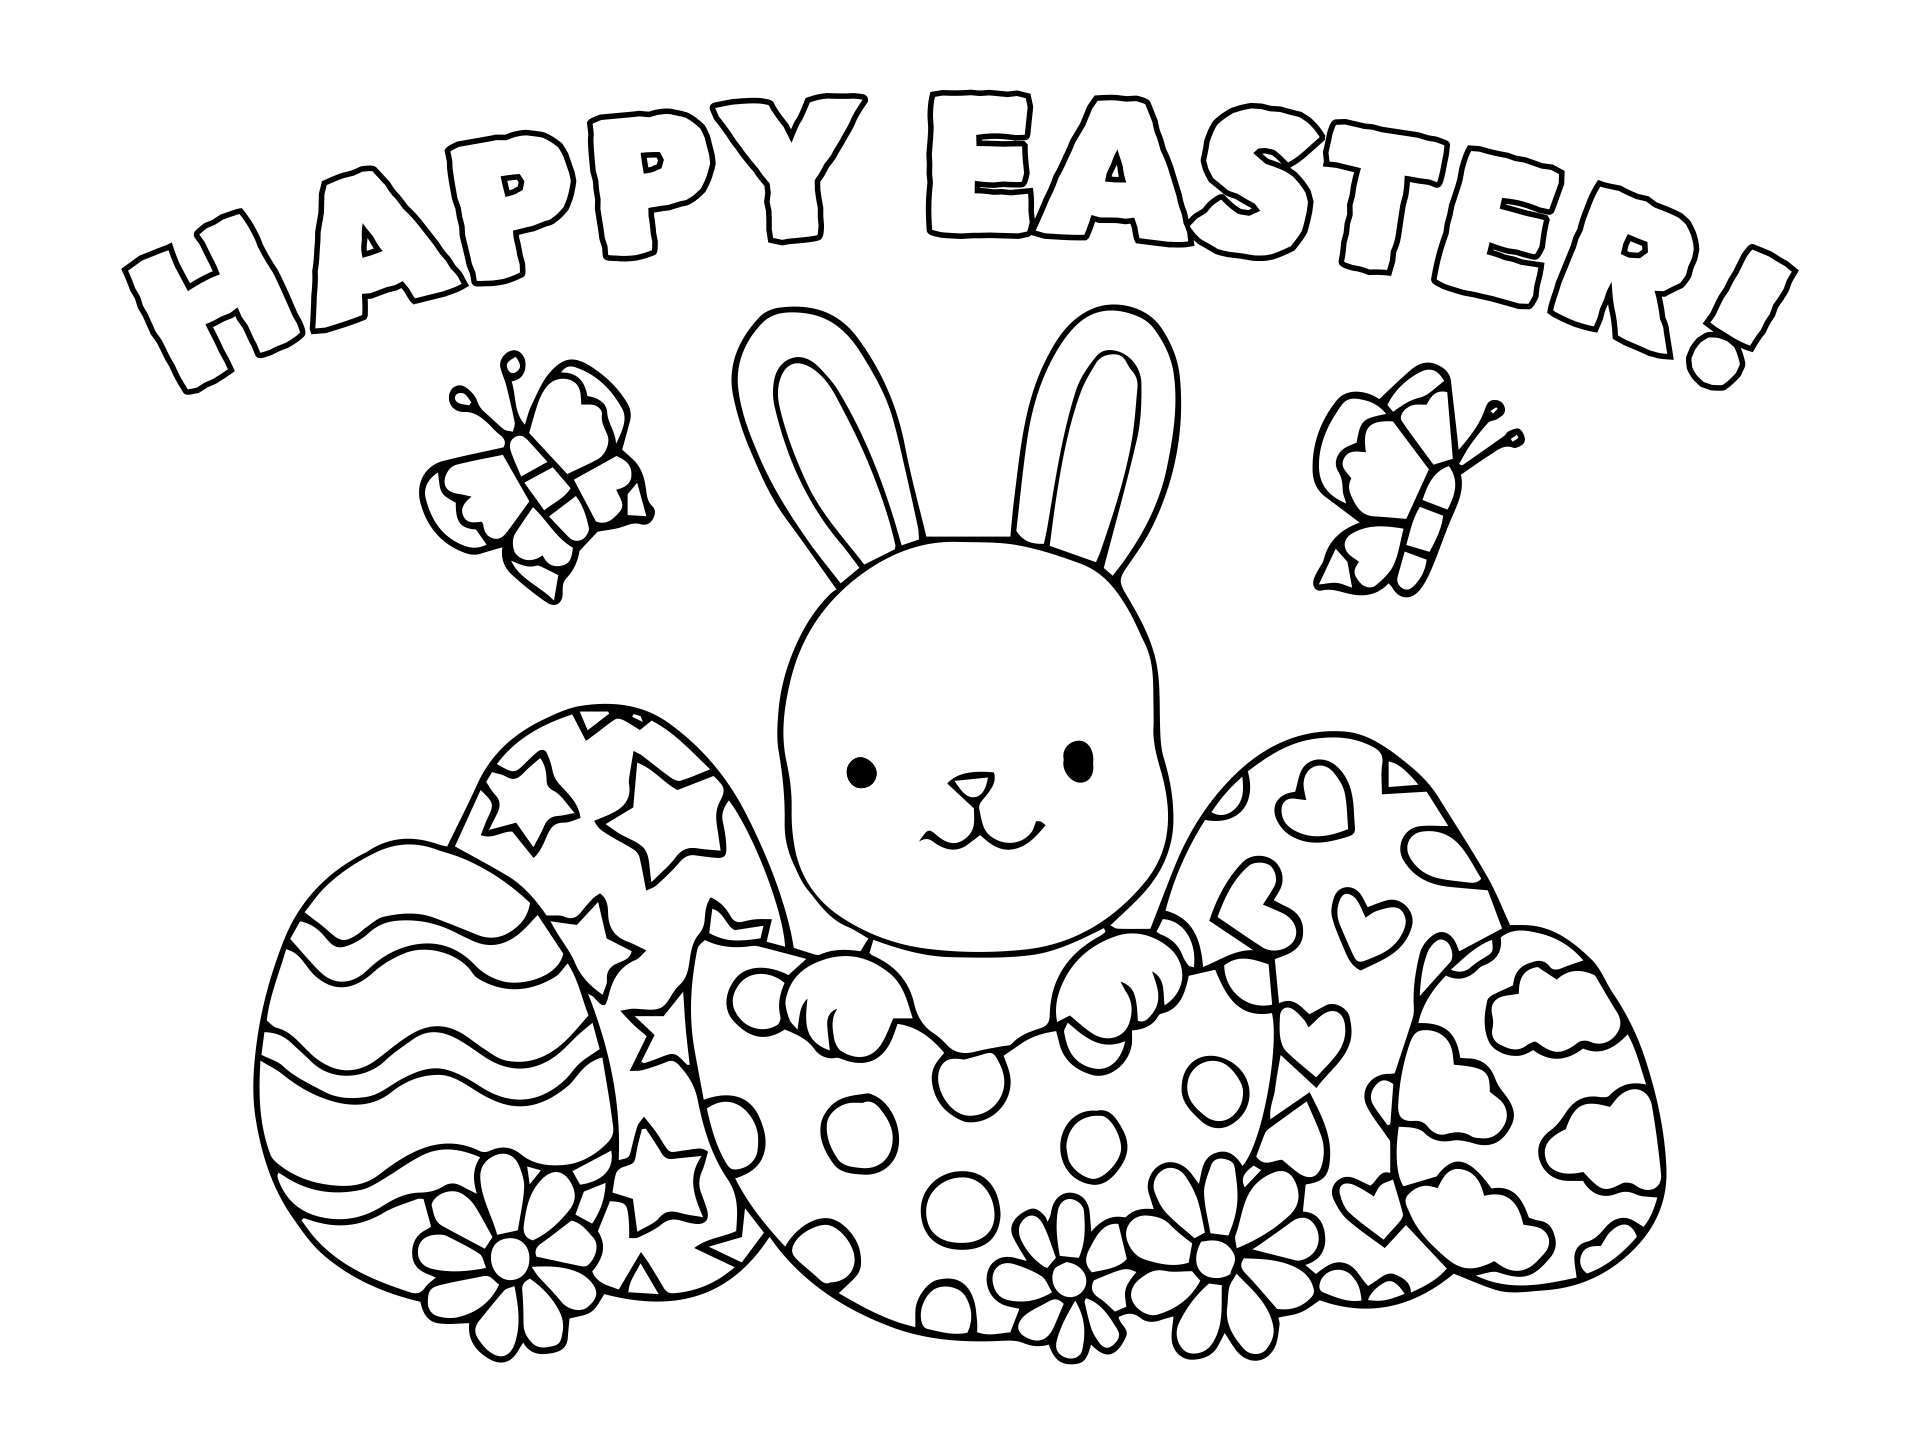 20 Best Happy Easter Coloring Pages Printable   printablee.com